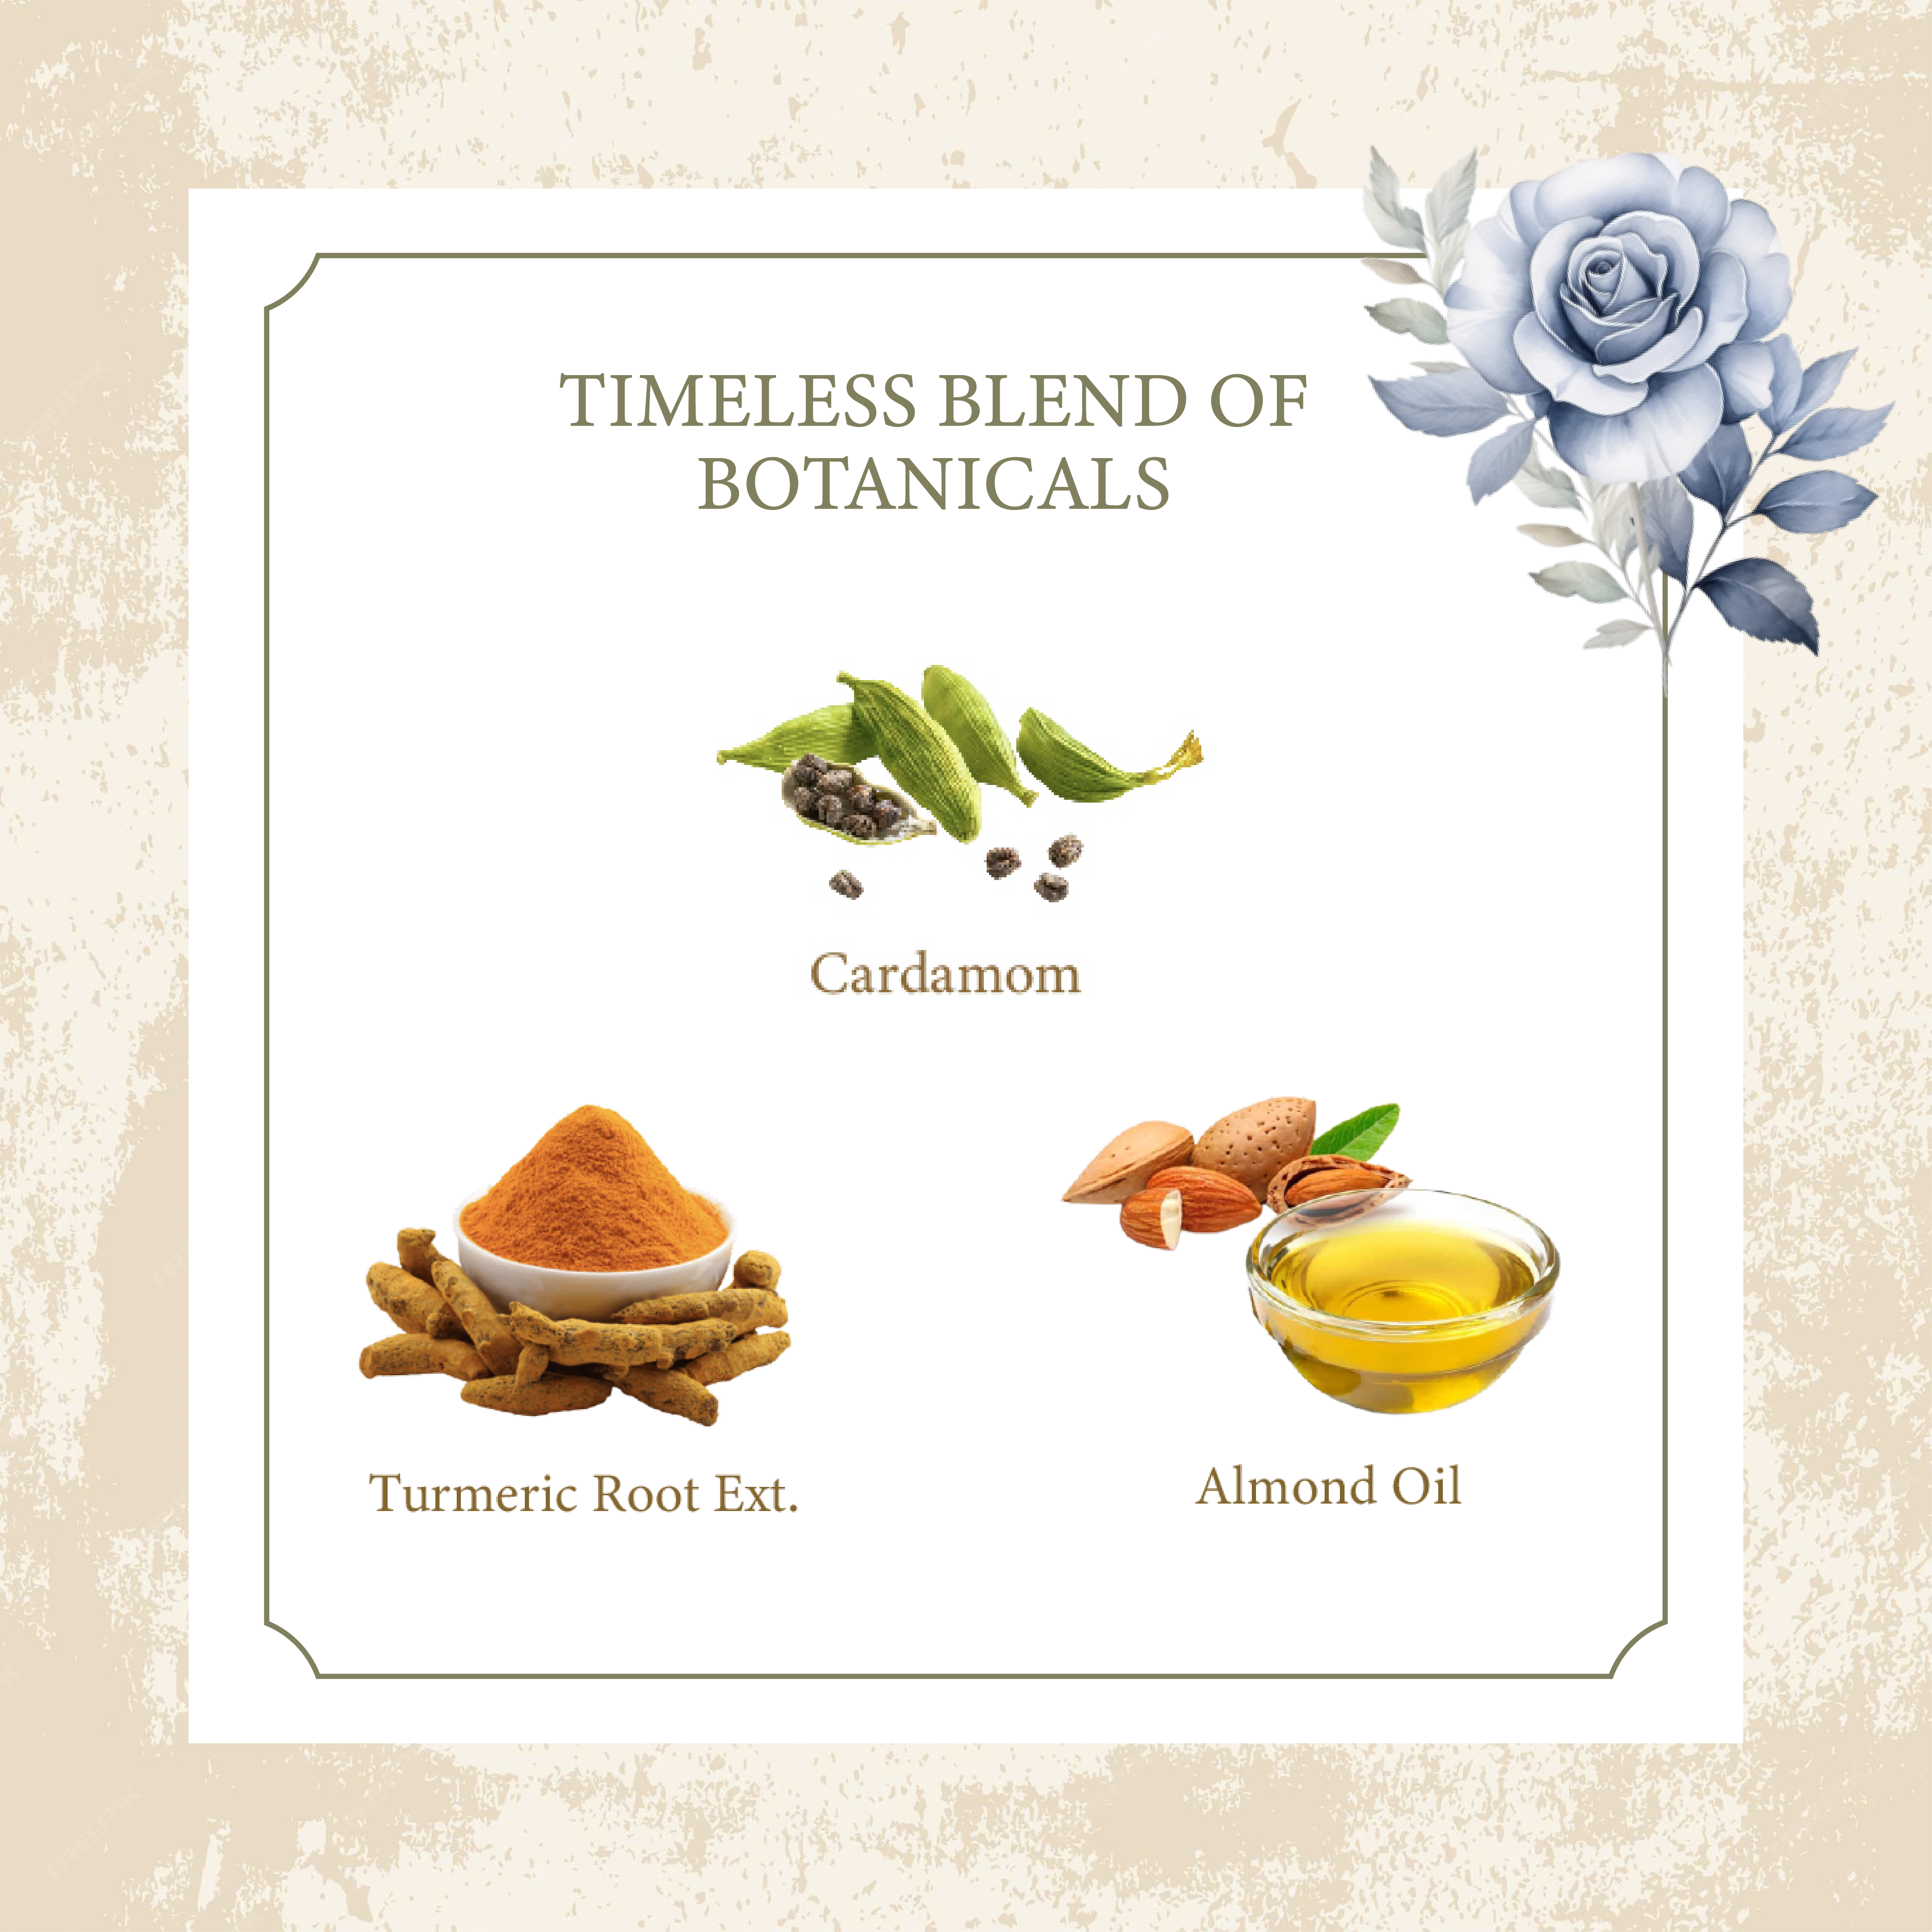 cardamom, turmeric root ext., almond oil face cream